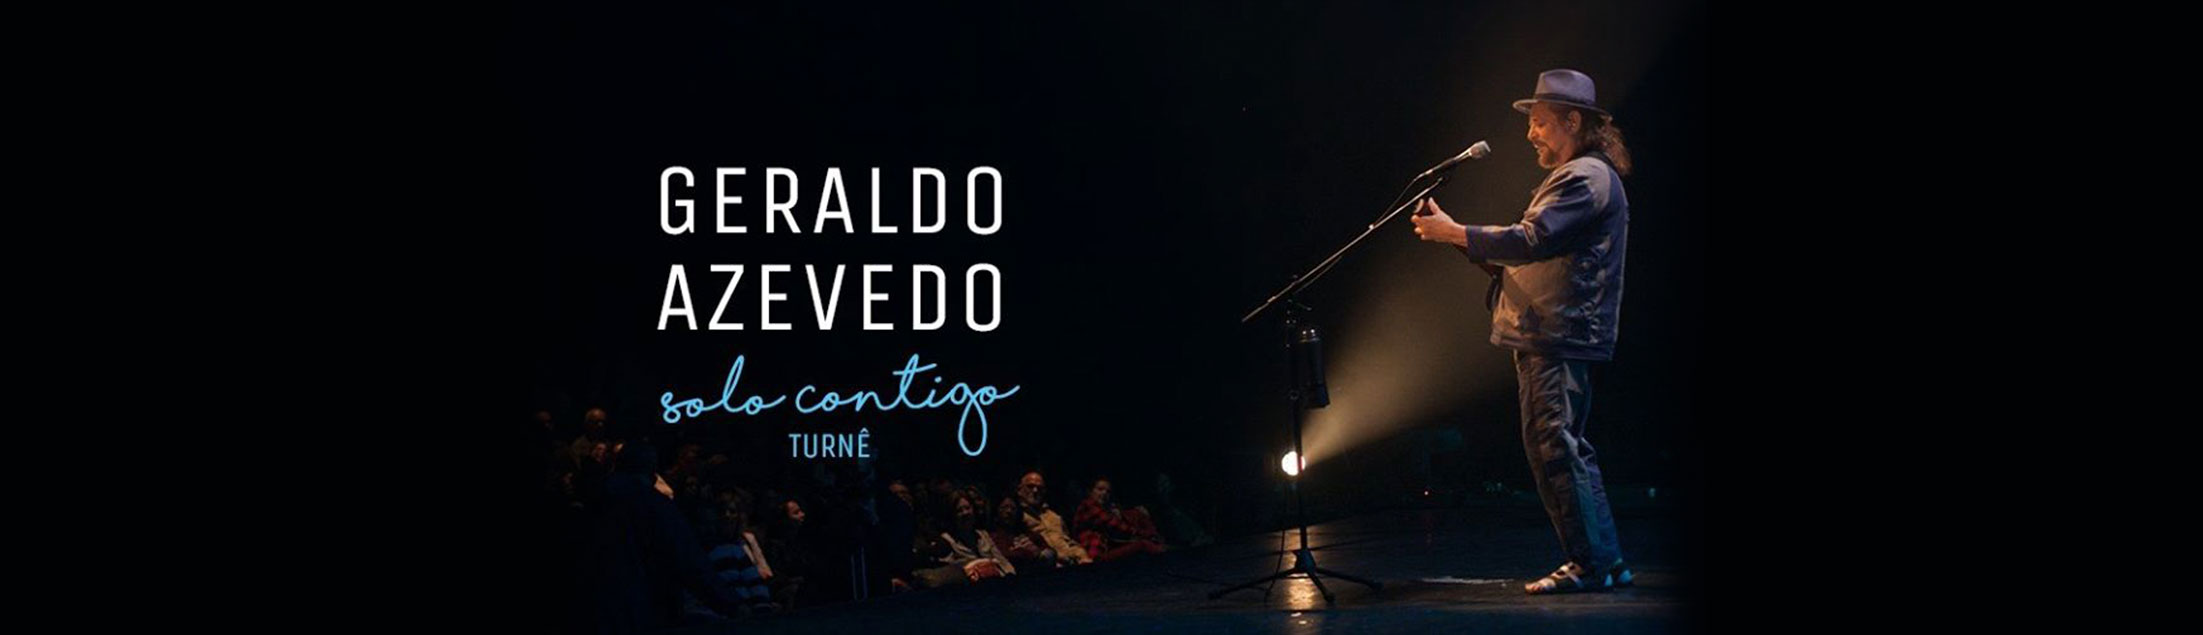 Geraldo Azevedo apresenta turnê 'Solo Contigo' no Teatro Rival